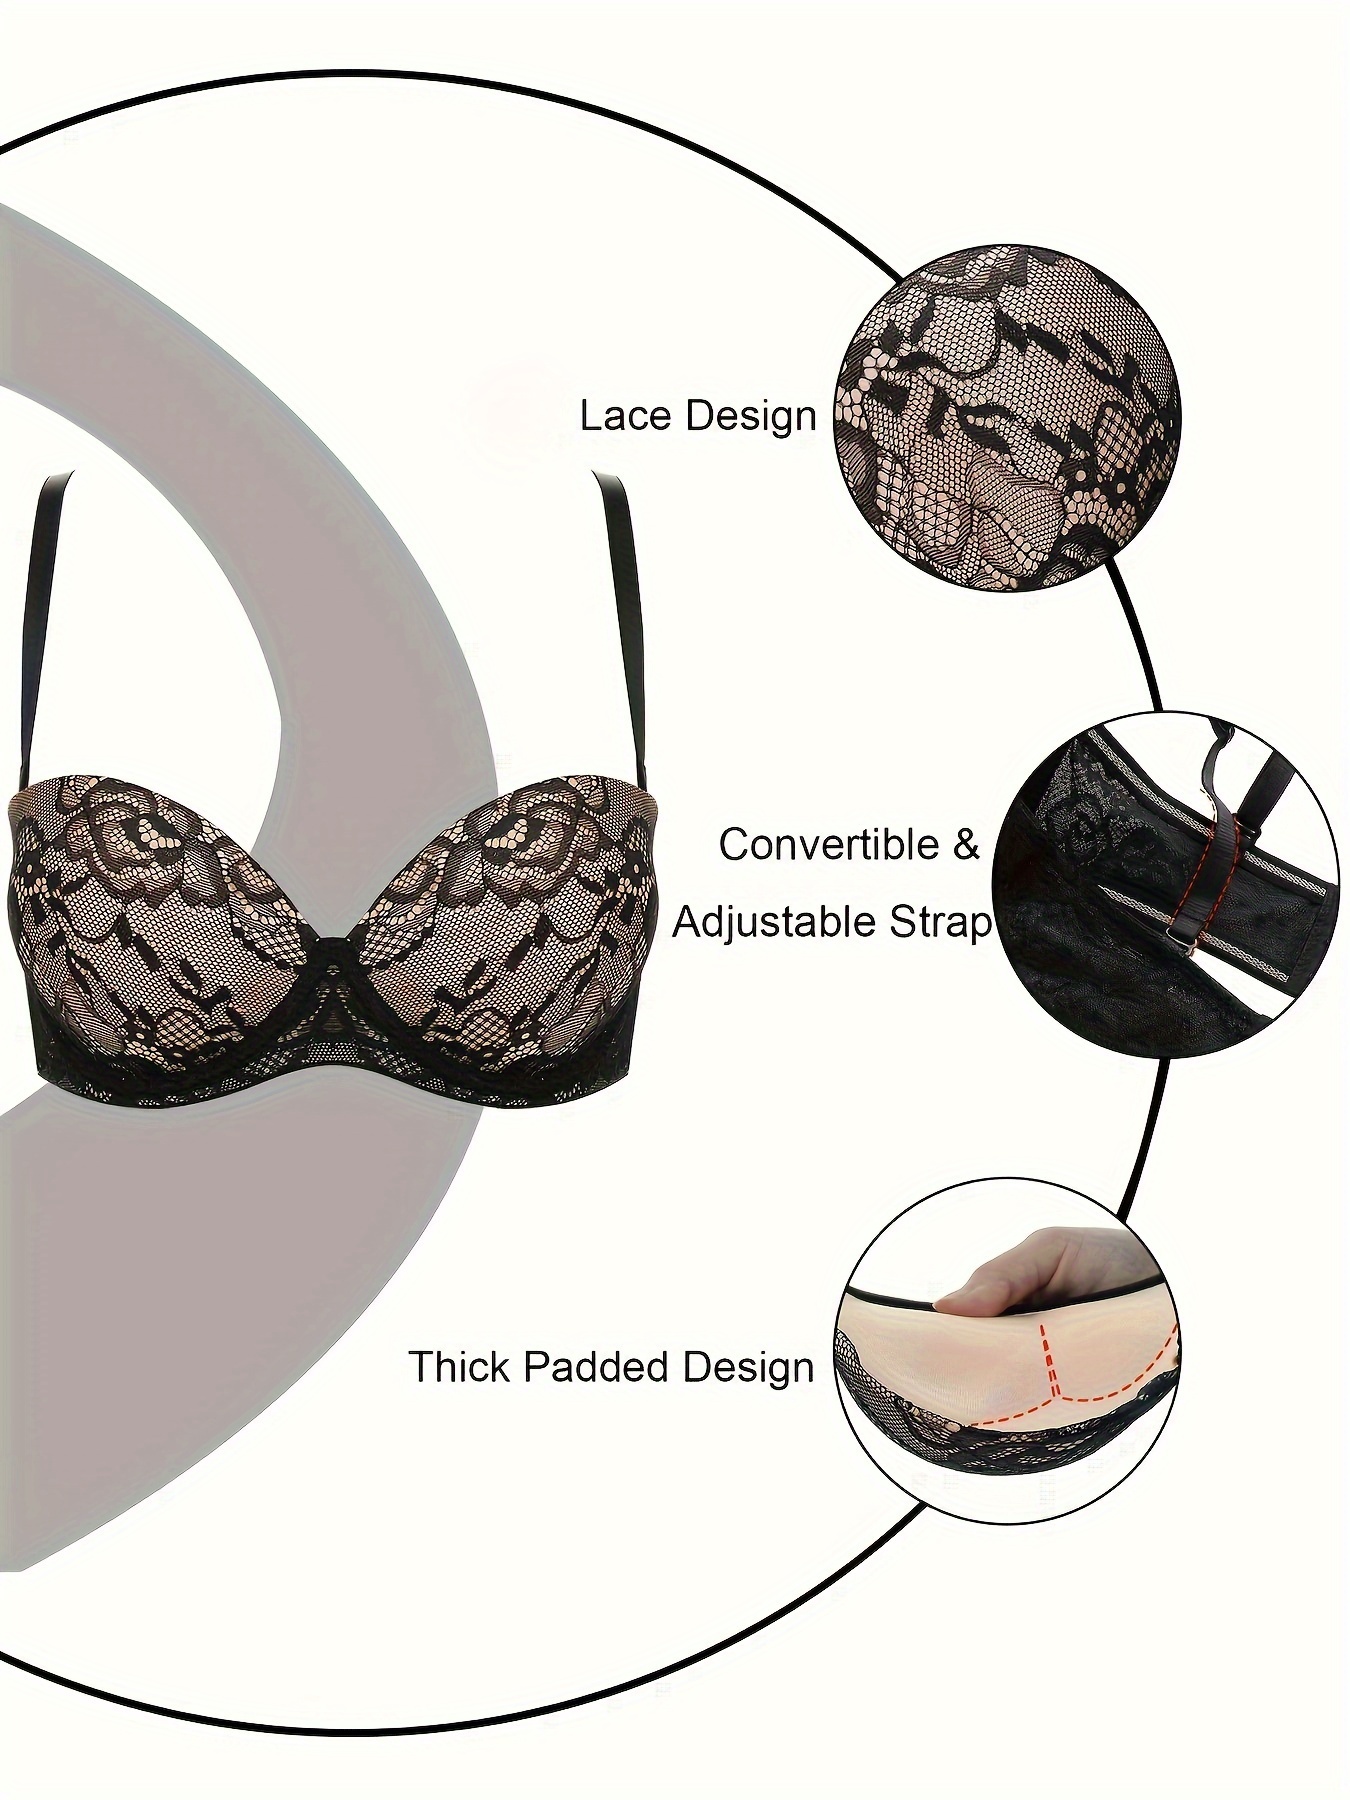 Avon bra - 34B or 75B size, Women's Fashion, Undergarments